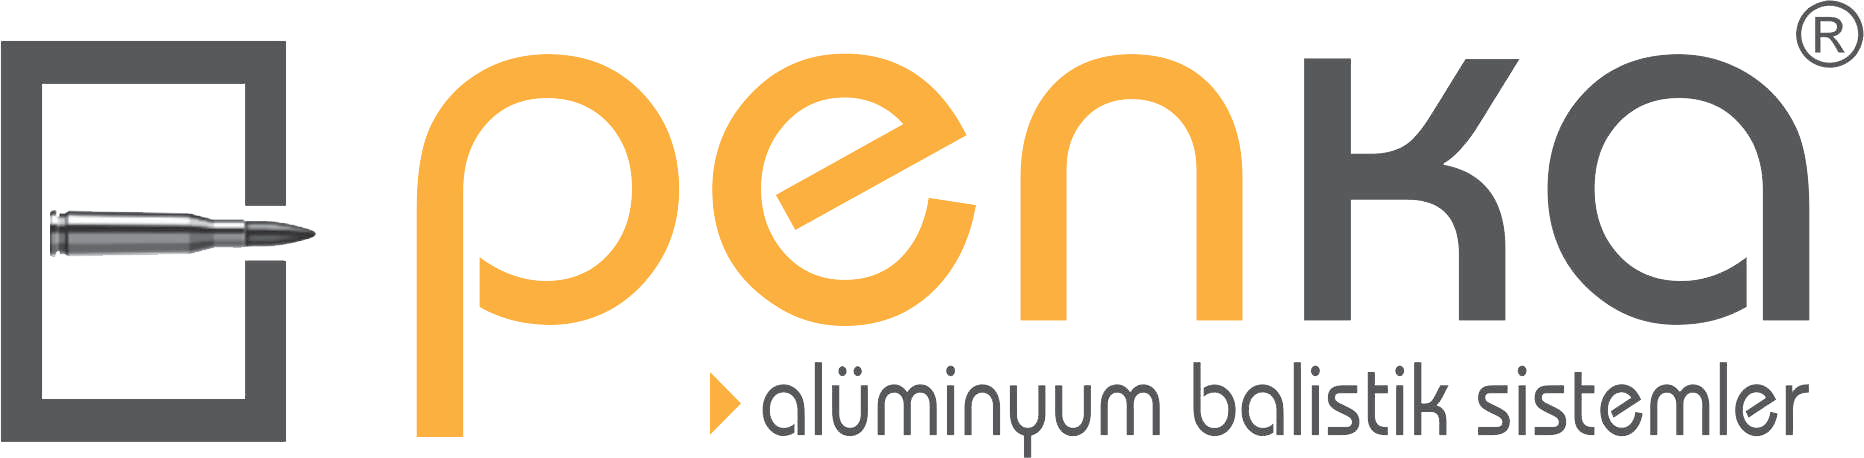 Penka Alüminyum logo 